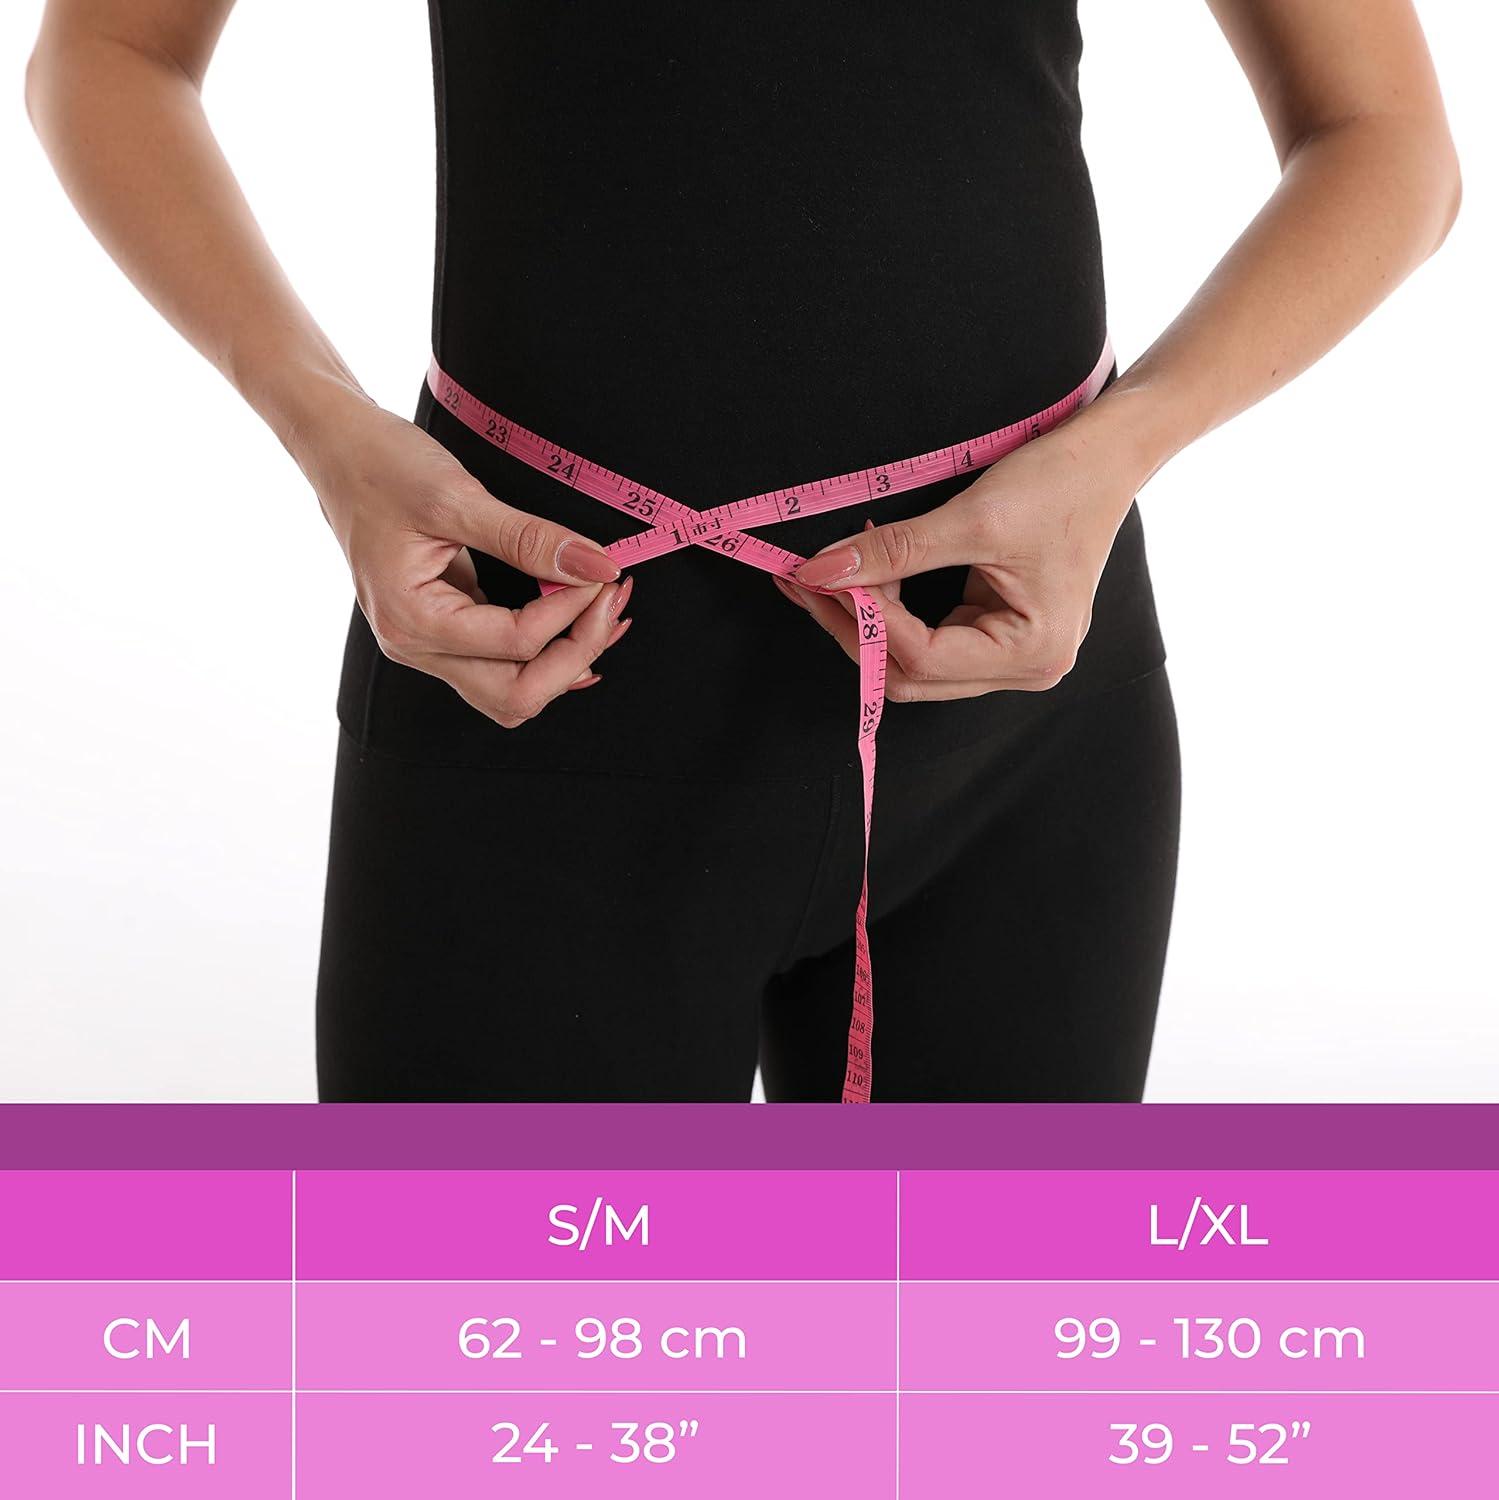 Umbilical Hernia Support Belt for Women. Adjustable Abdominal